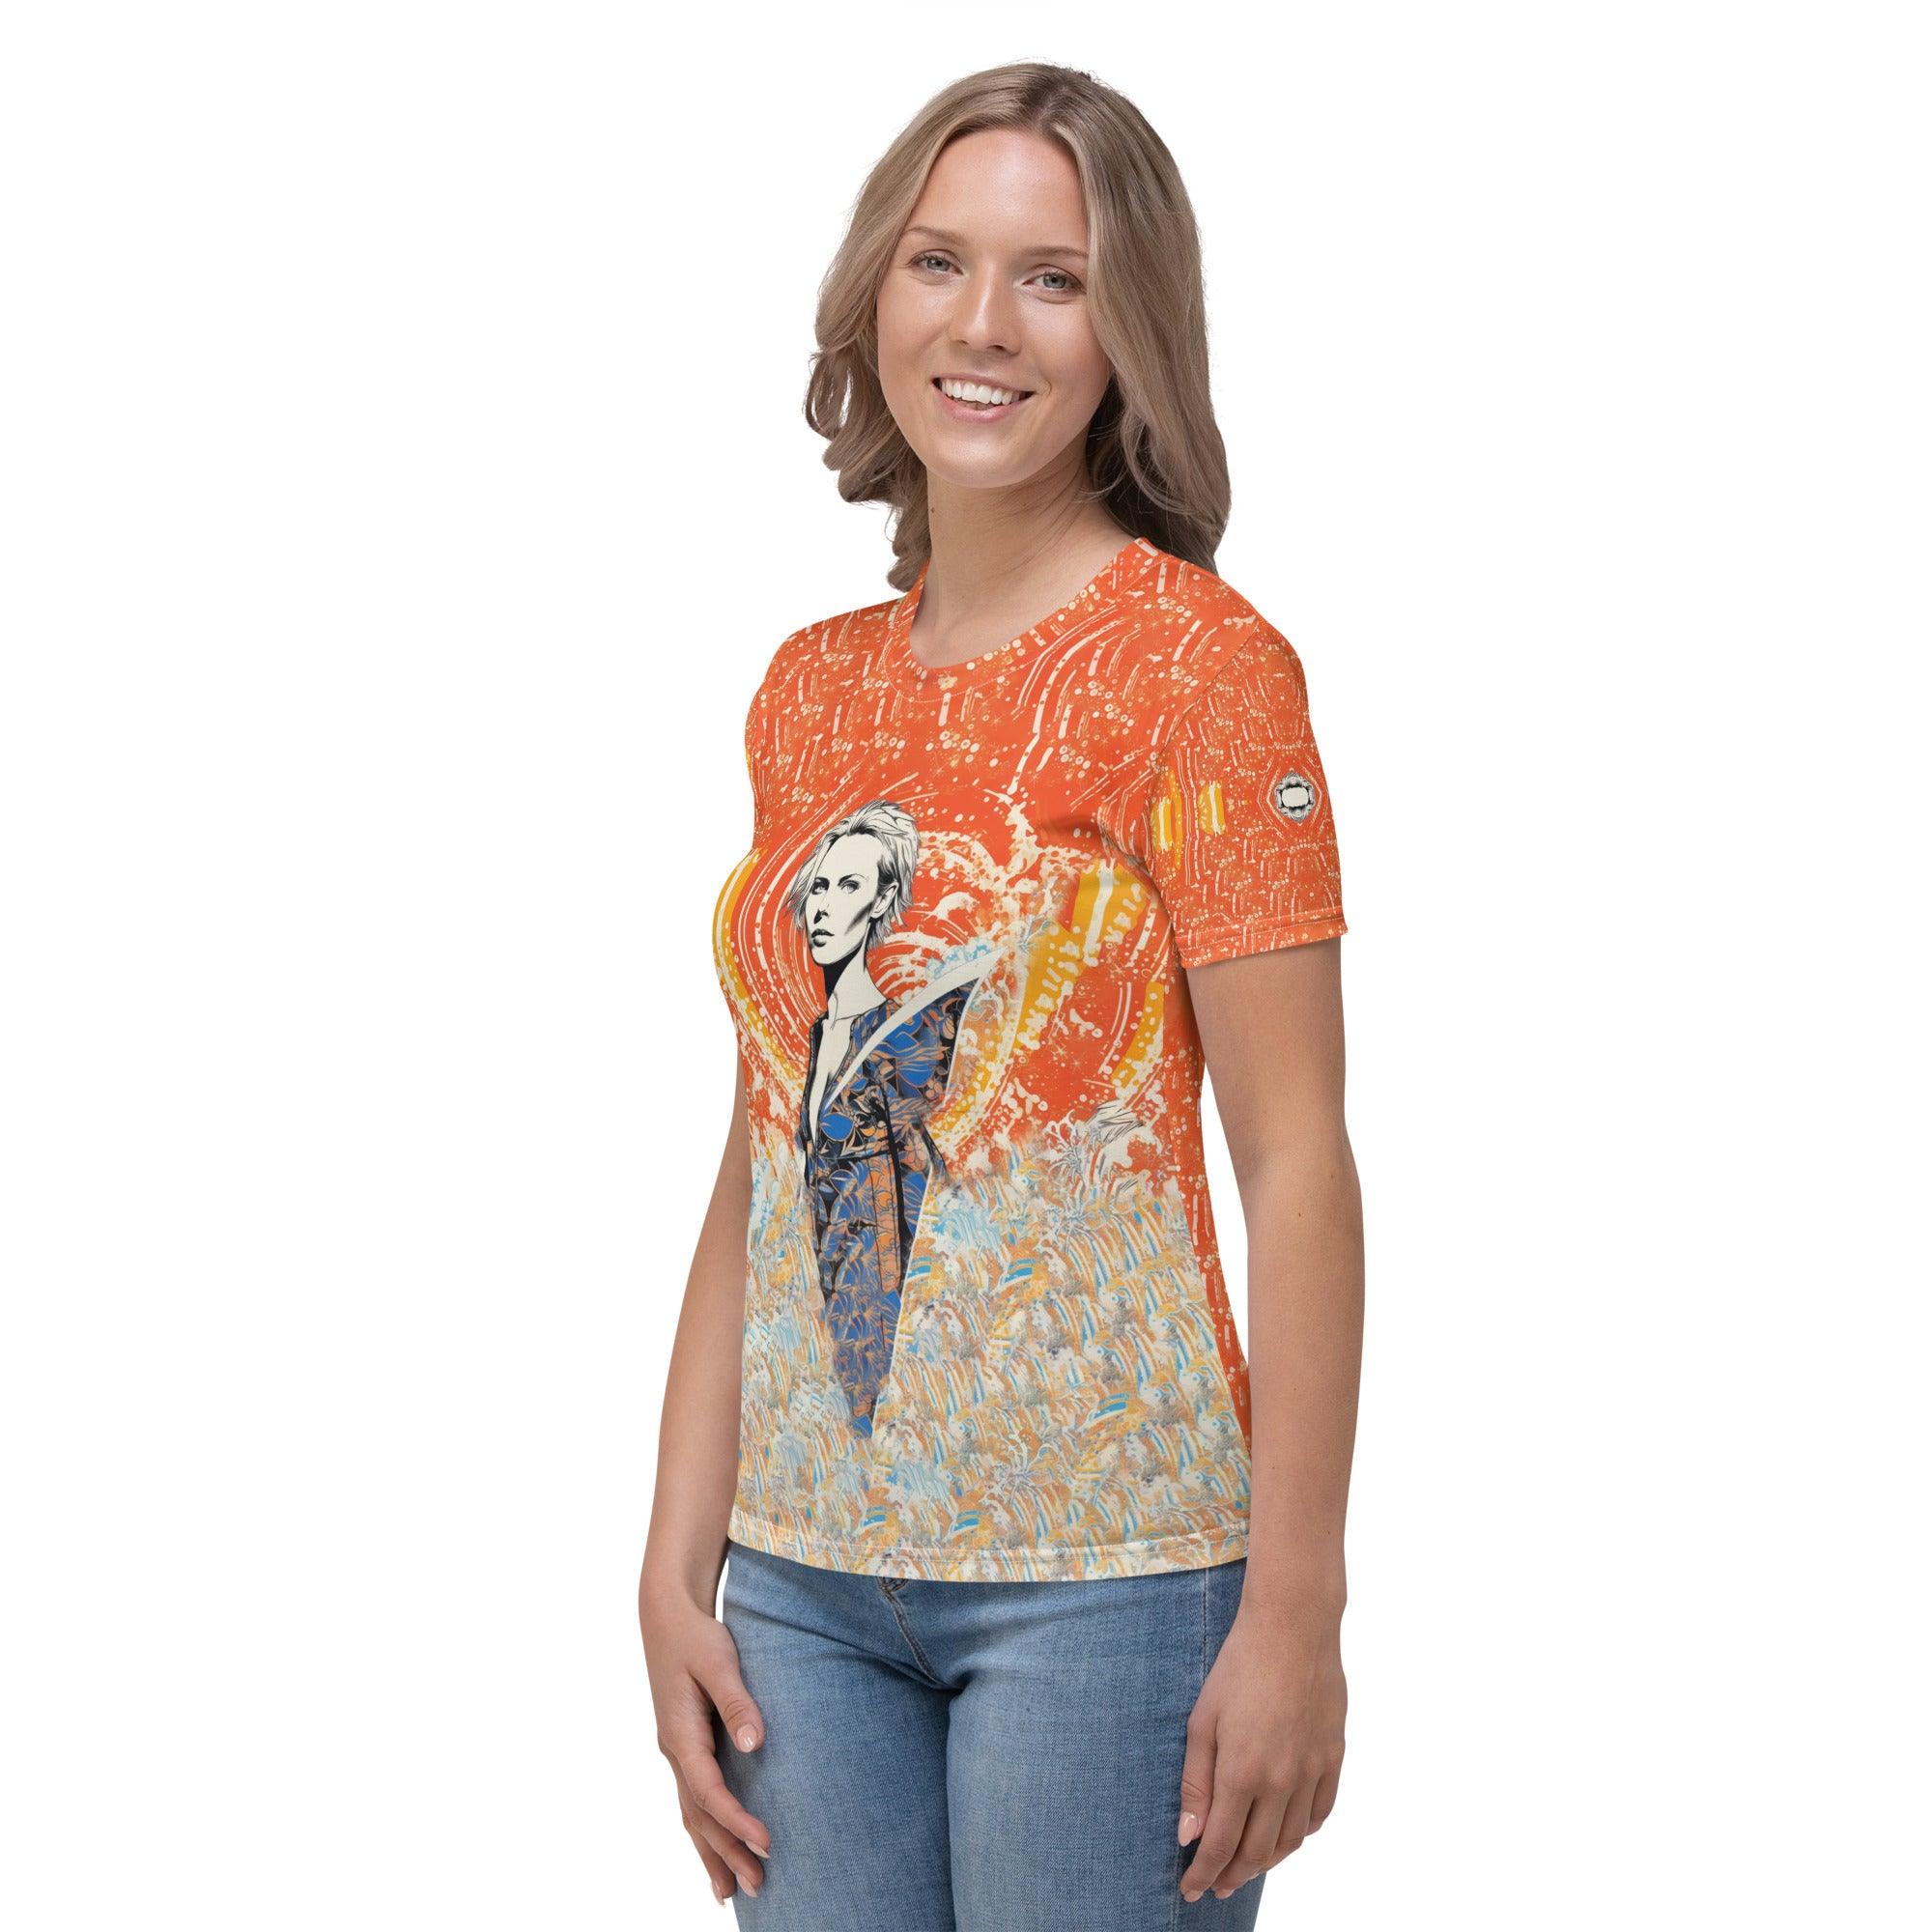 Surfing Spirit All-Over Print Women's Crew Neck T-Shirt - Beyond T-shirts